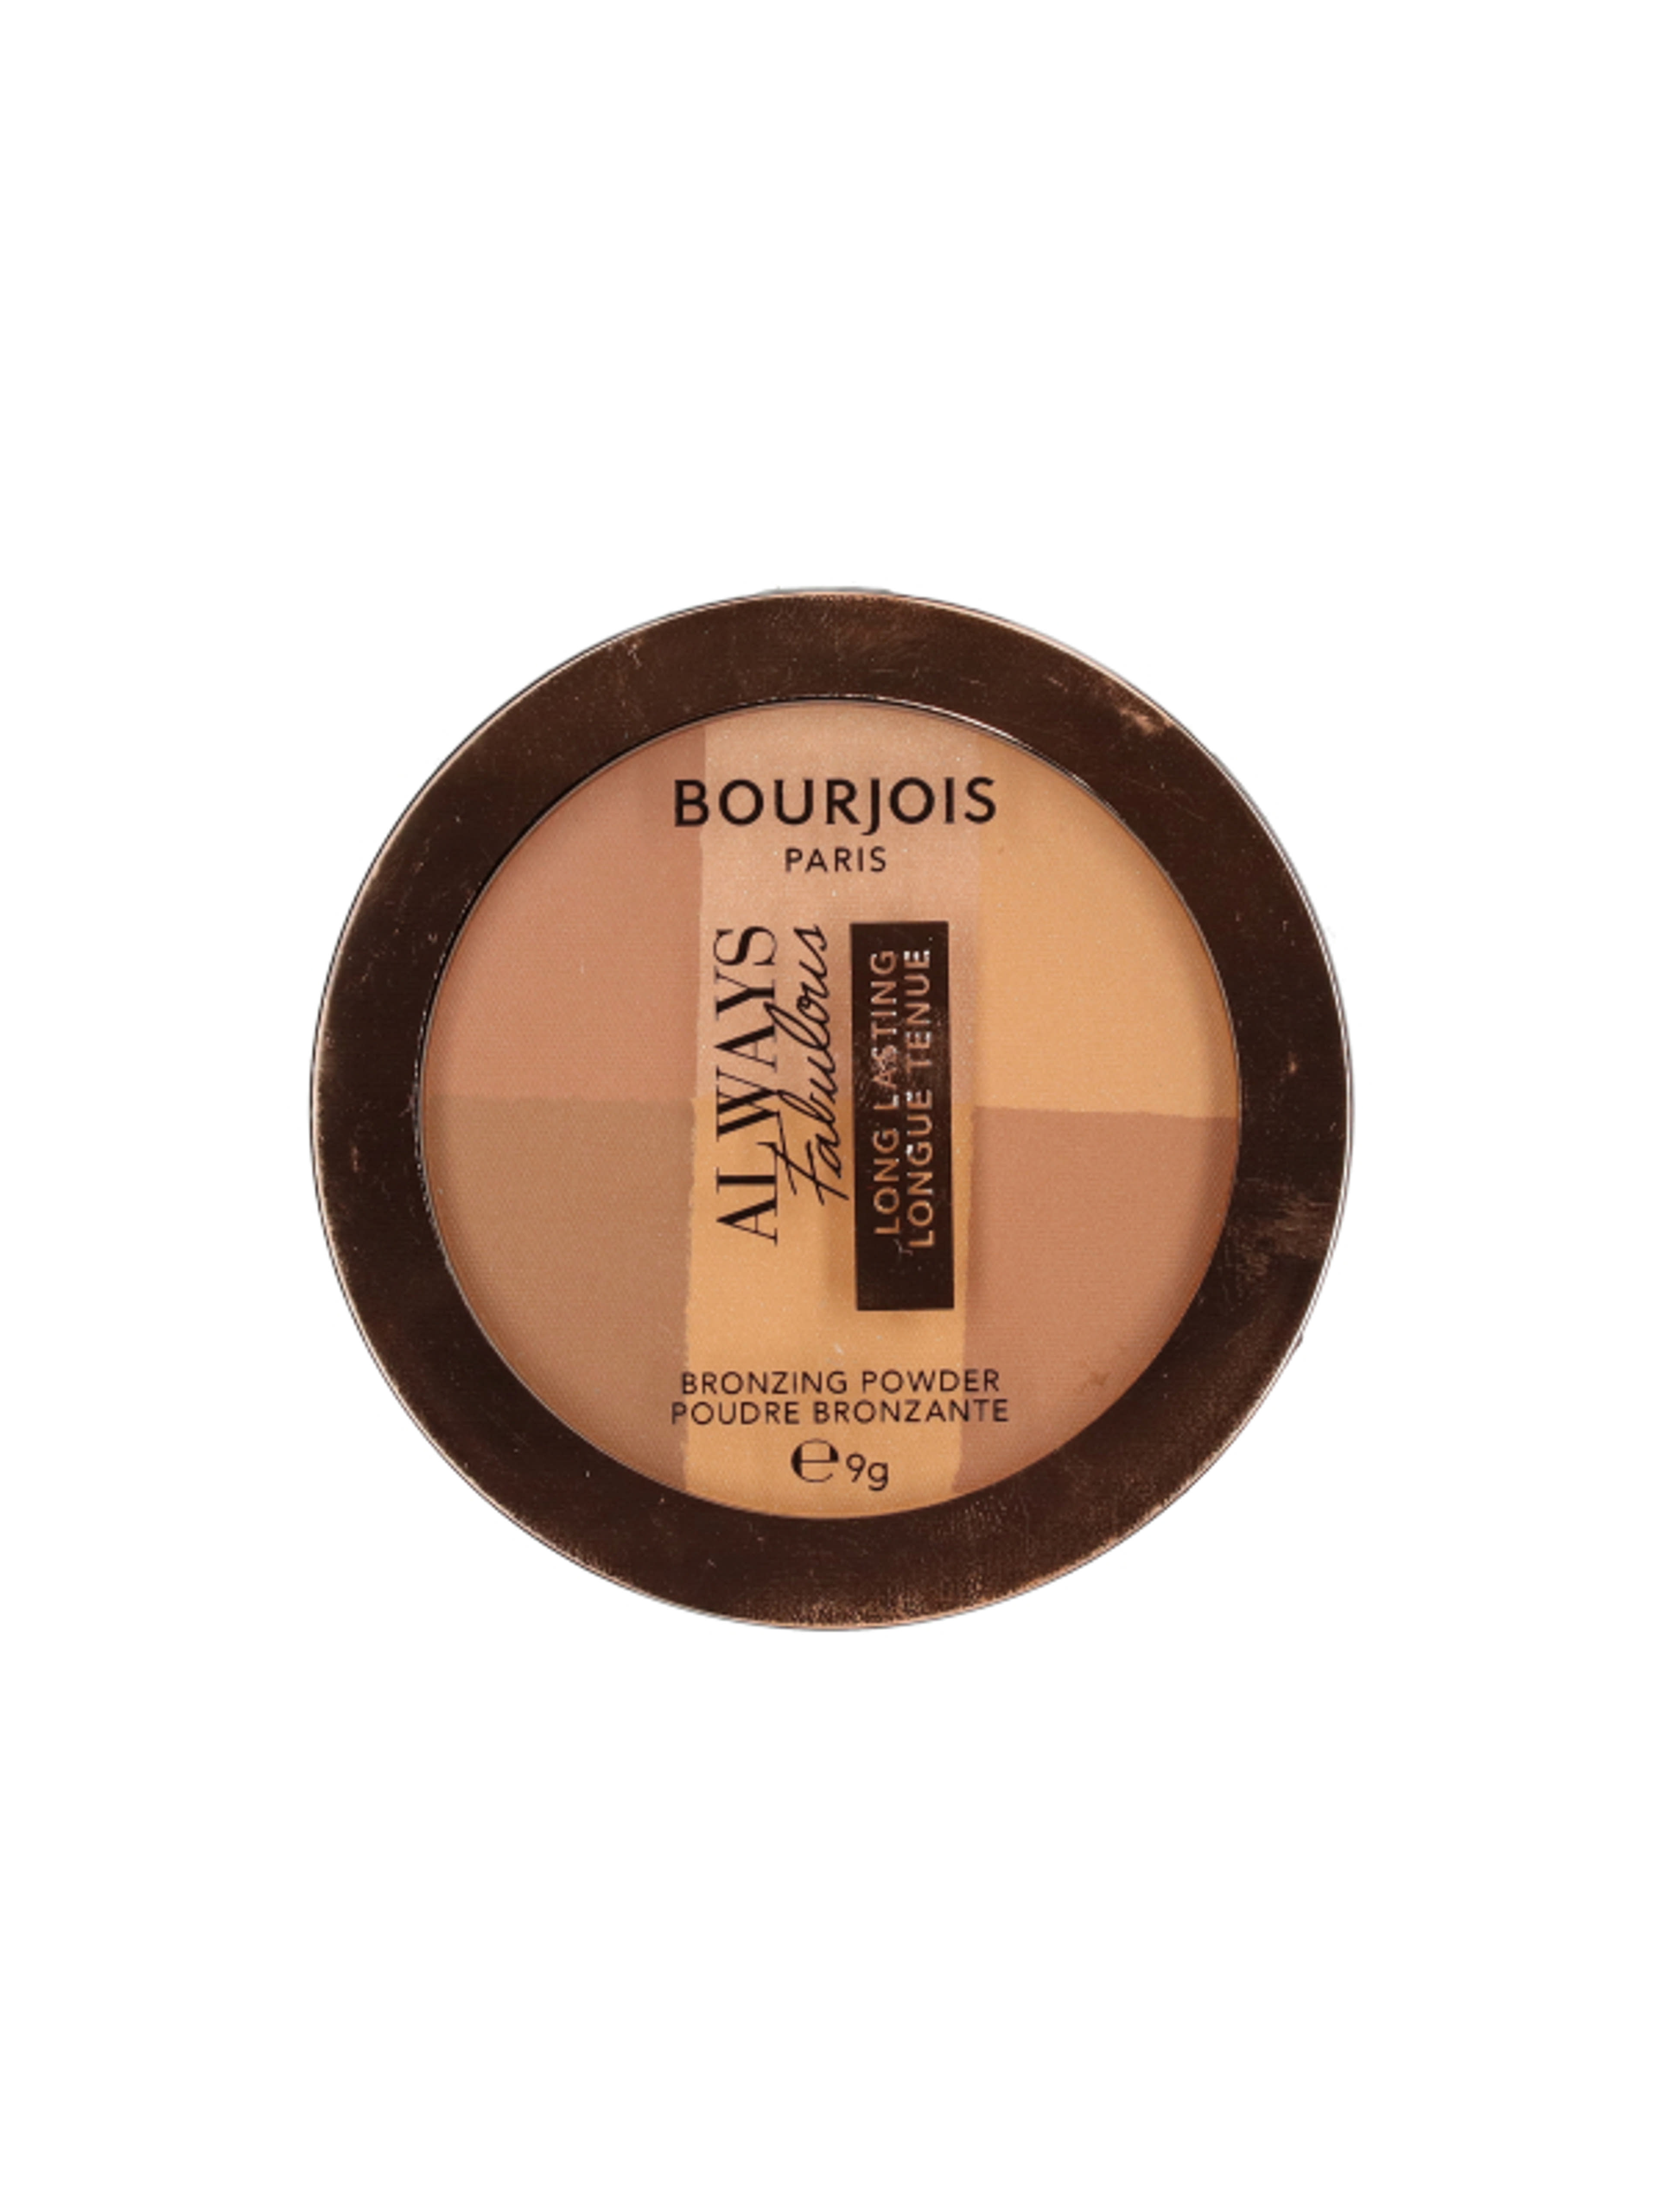 Bourjois Always Fabulous bronzosító  /001 - 1 db-1